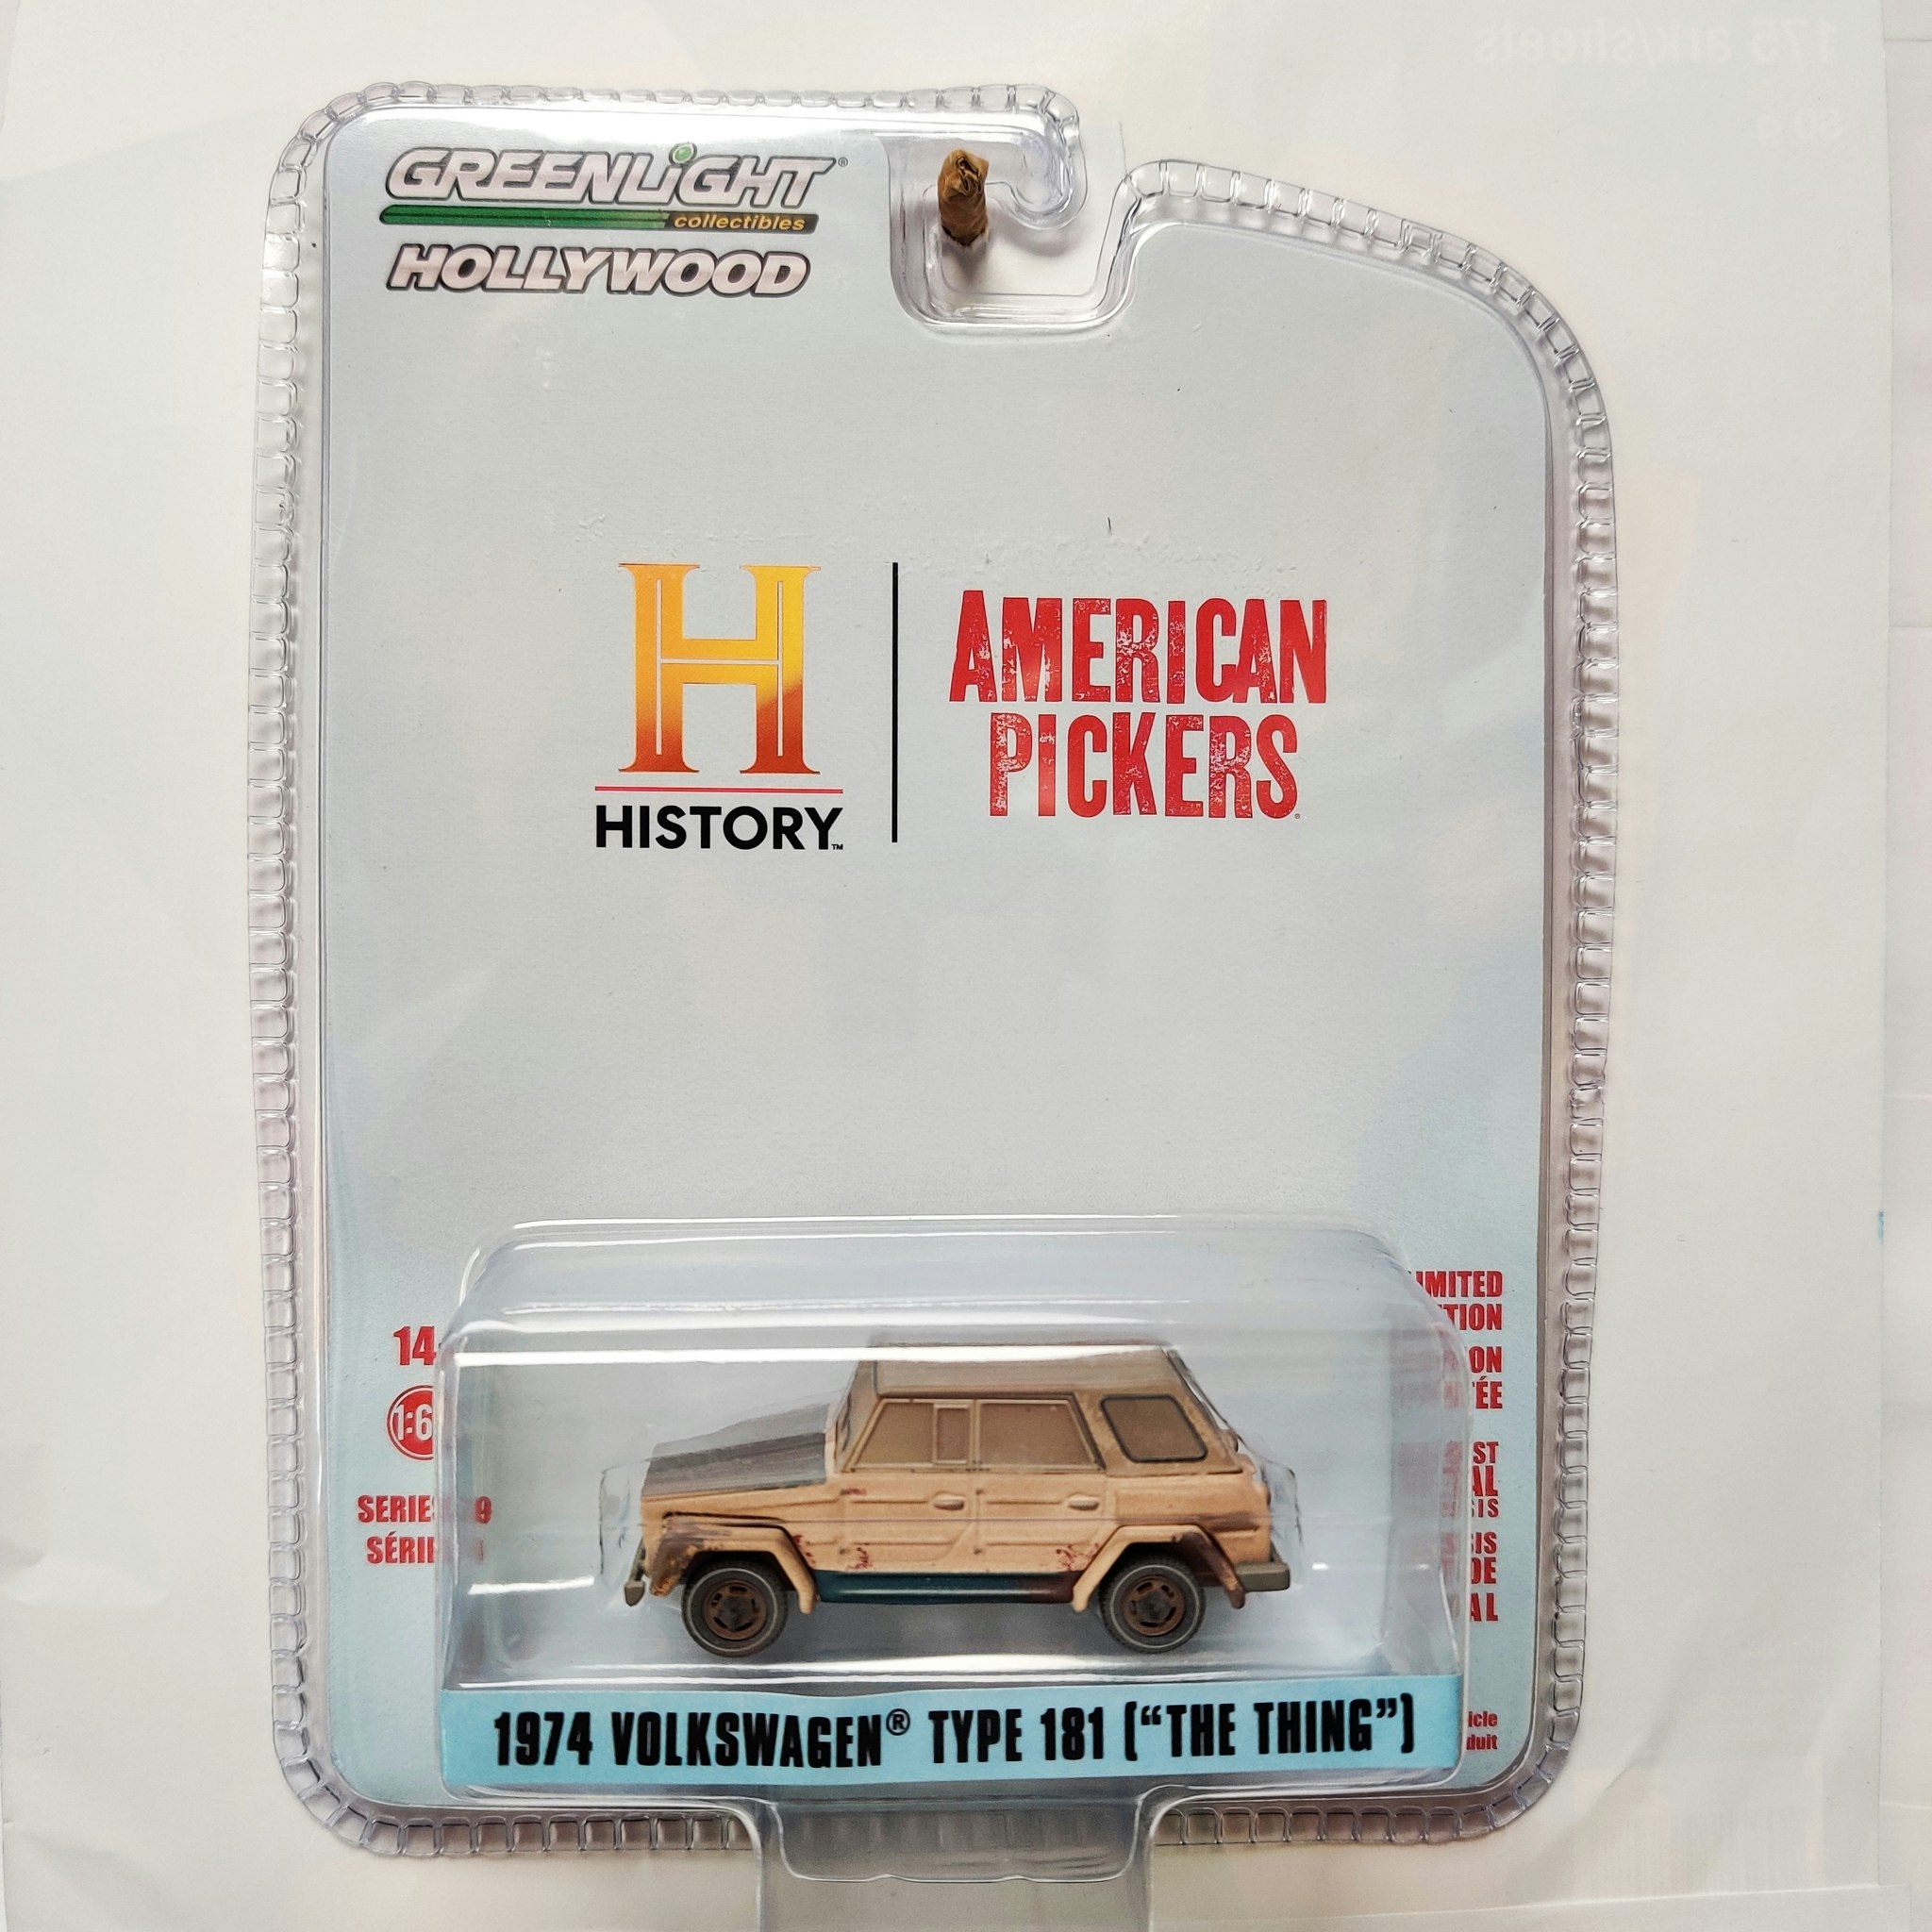 Skala 1/64 Greenlight Hollywood "American Pickers" Volkswagen Type 181 "The Thing" 1974 Ser.